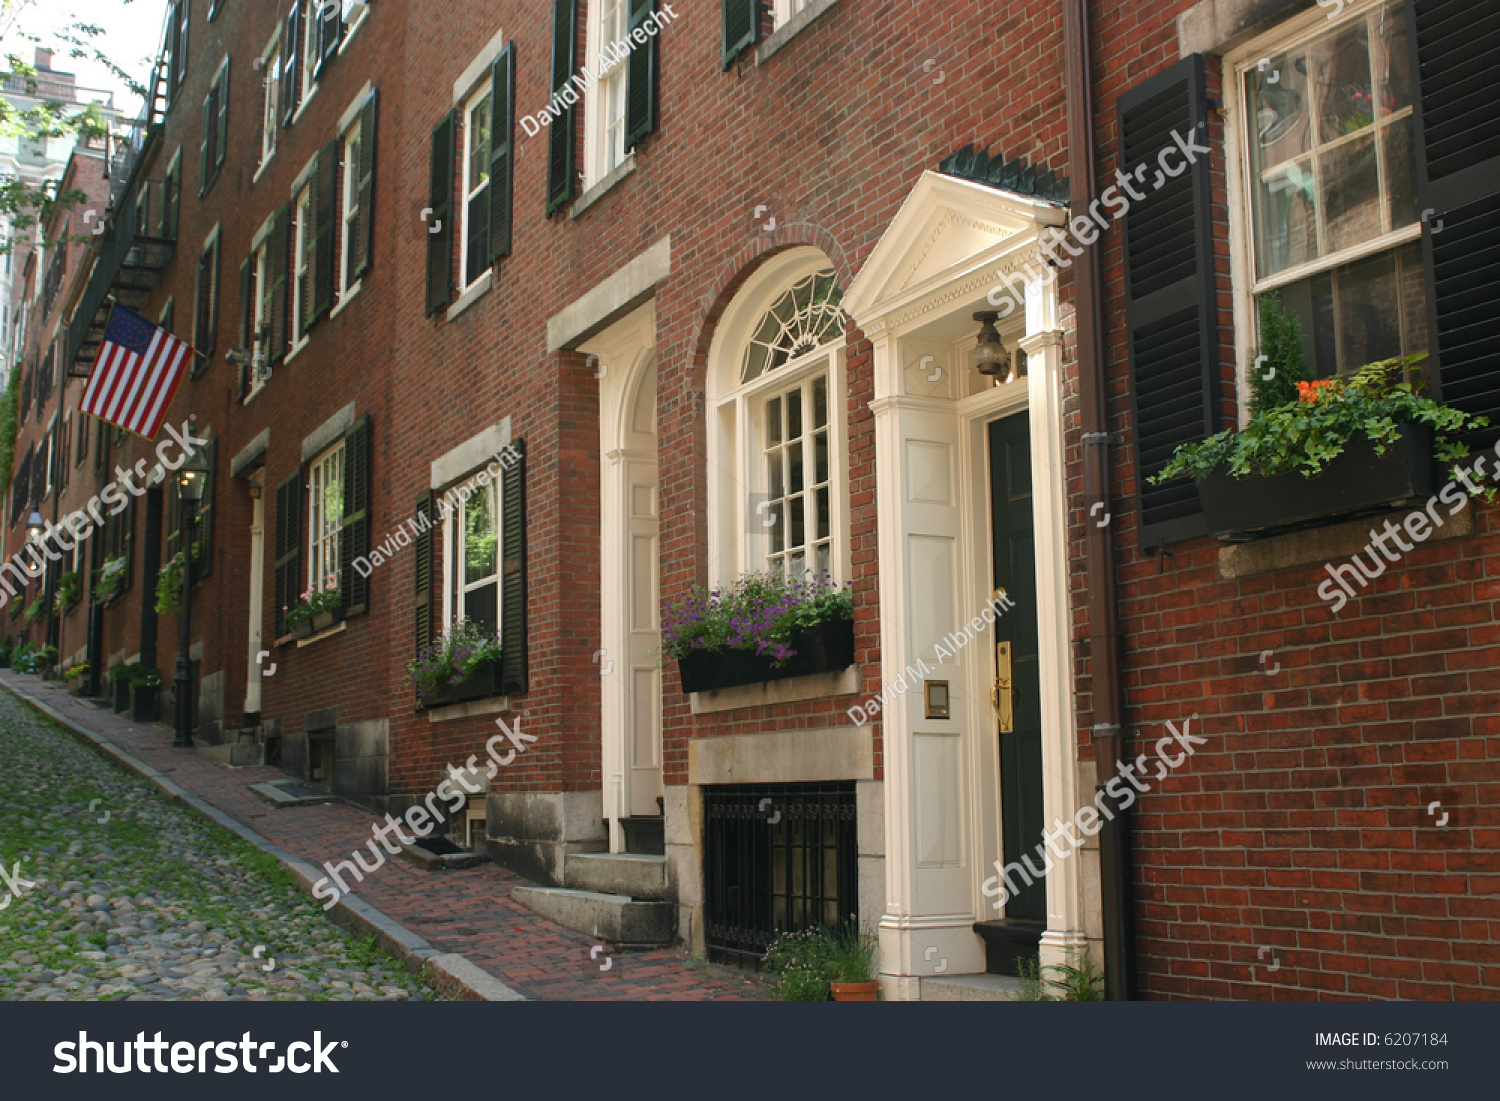 stock-photo-a-colonial-boston-street-in-the-historic-beacon-hill-neighborhood-6207184.jpg